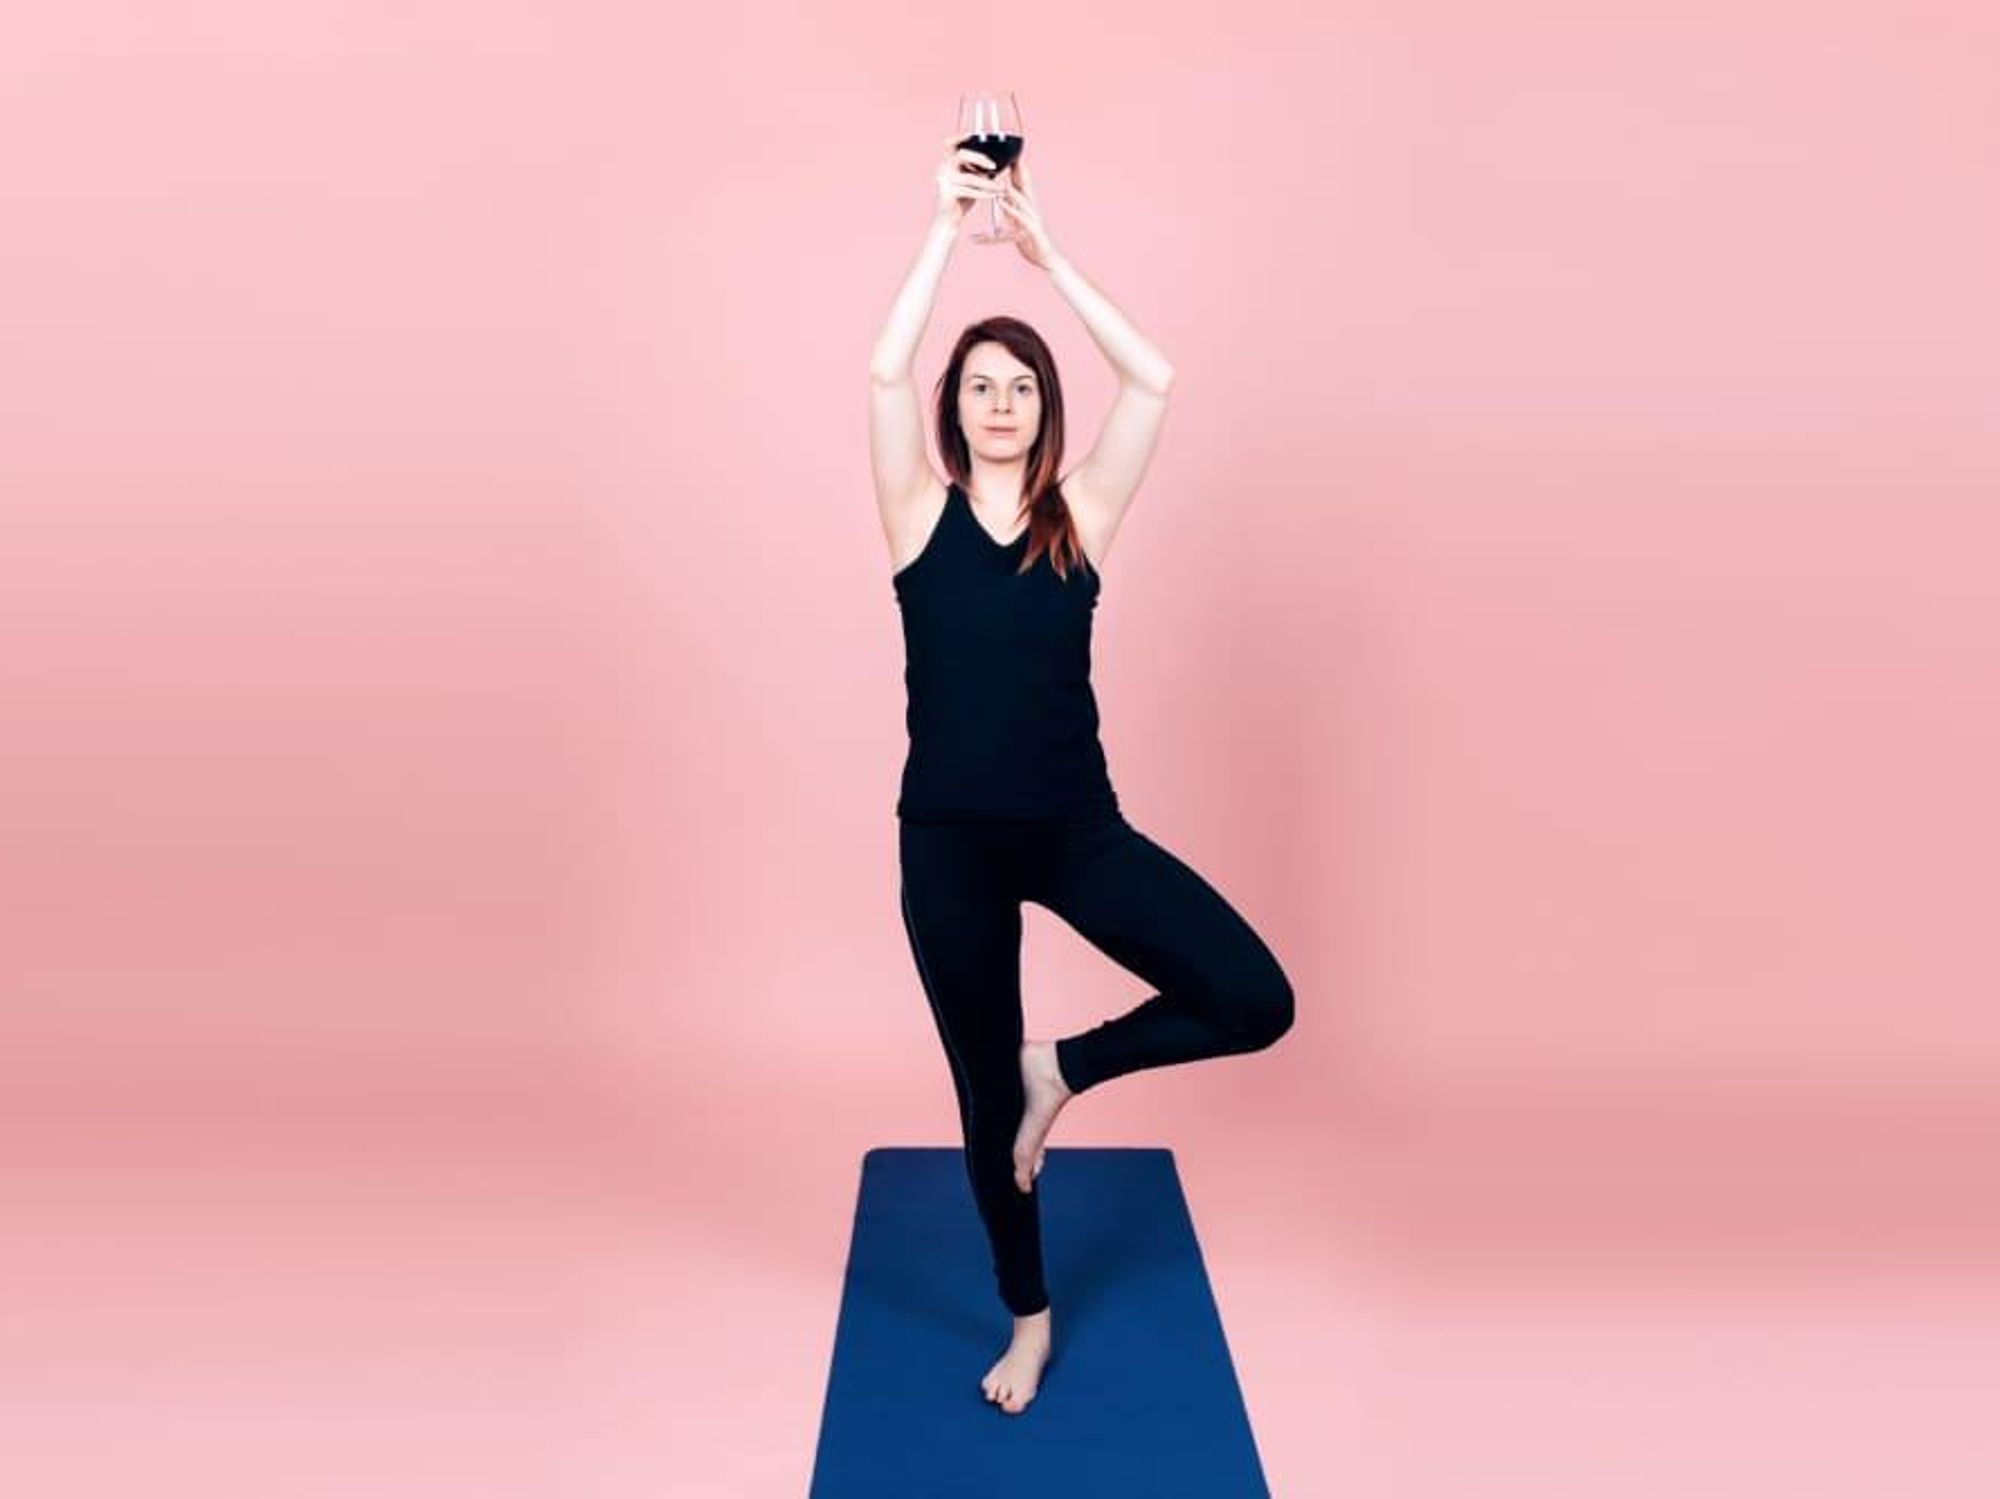 yoga wine pose woman